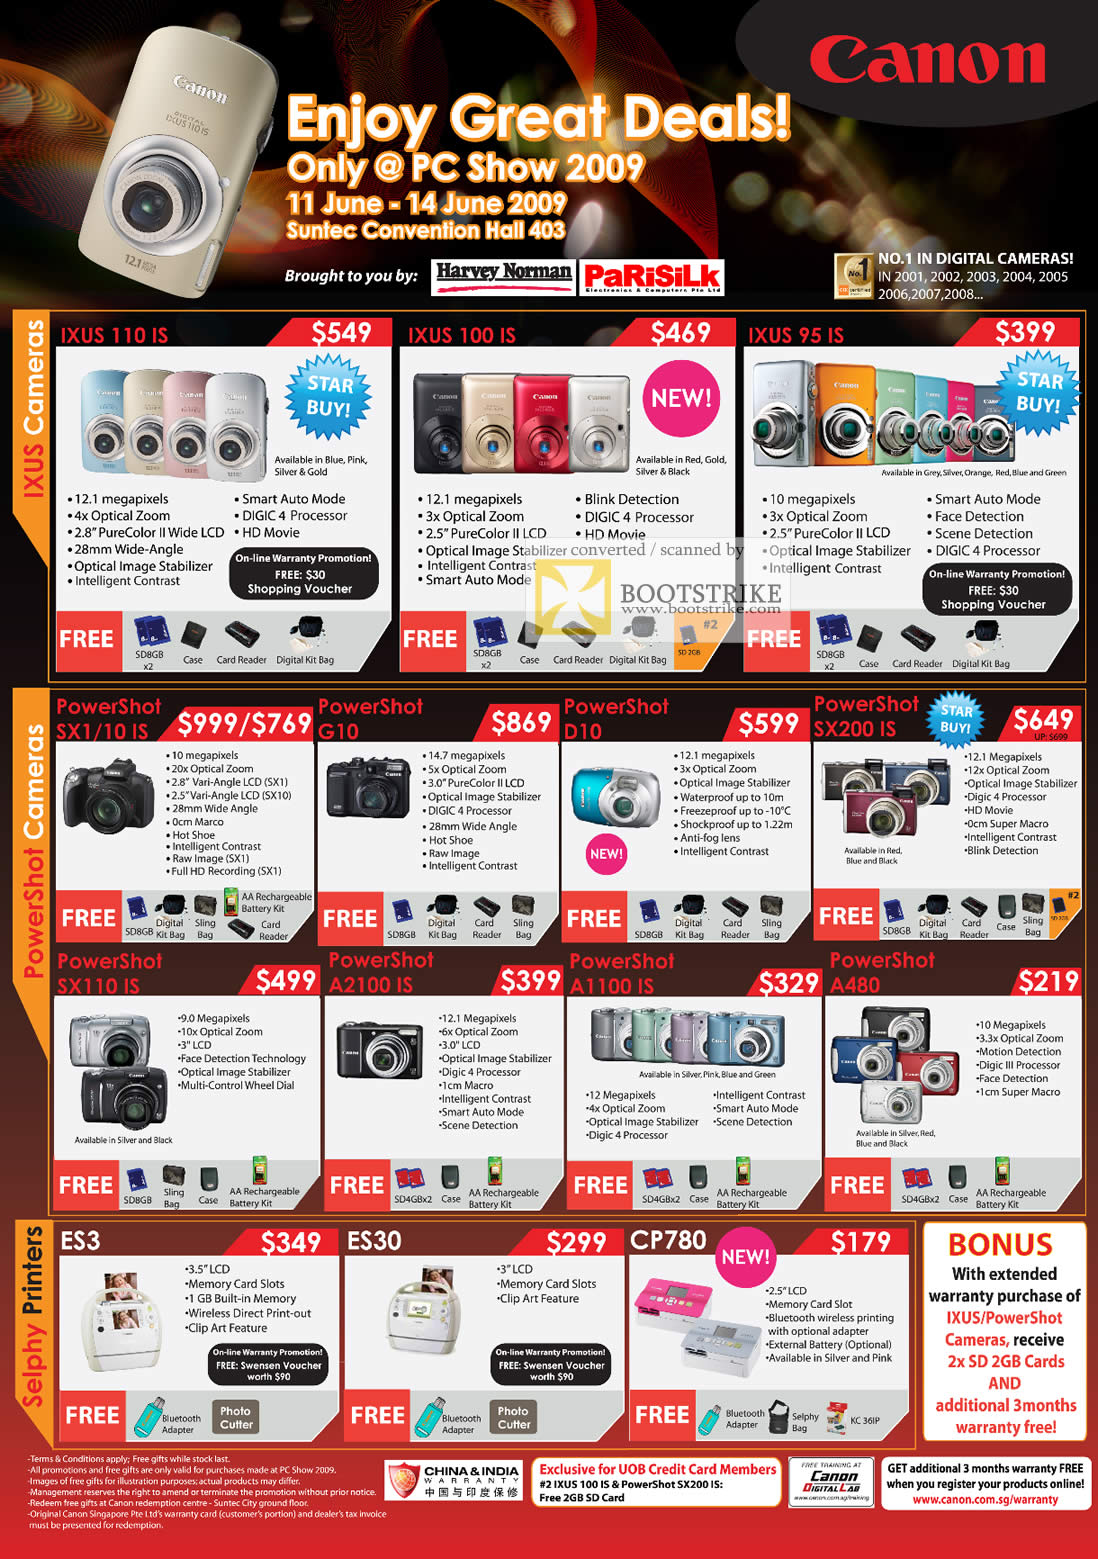 PC Show 2009 price list image brochure of Canon Ixus Cameras Powershot Selphy Printers